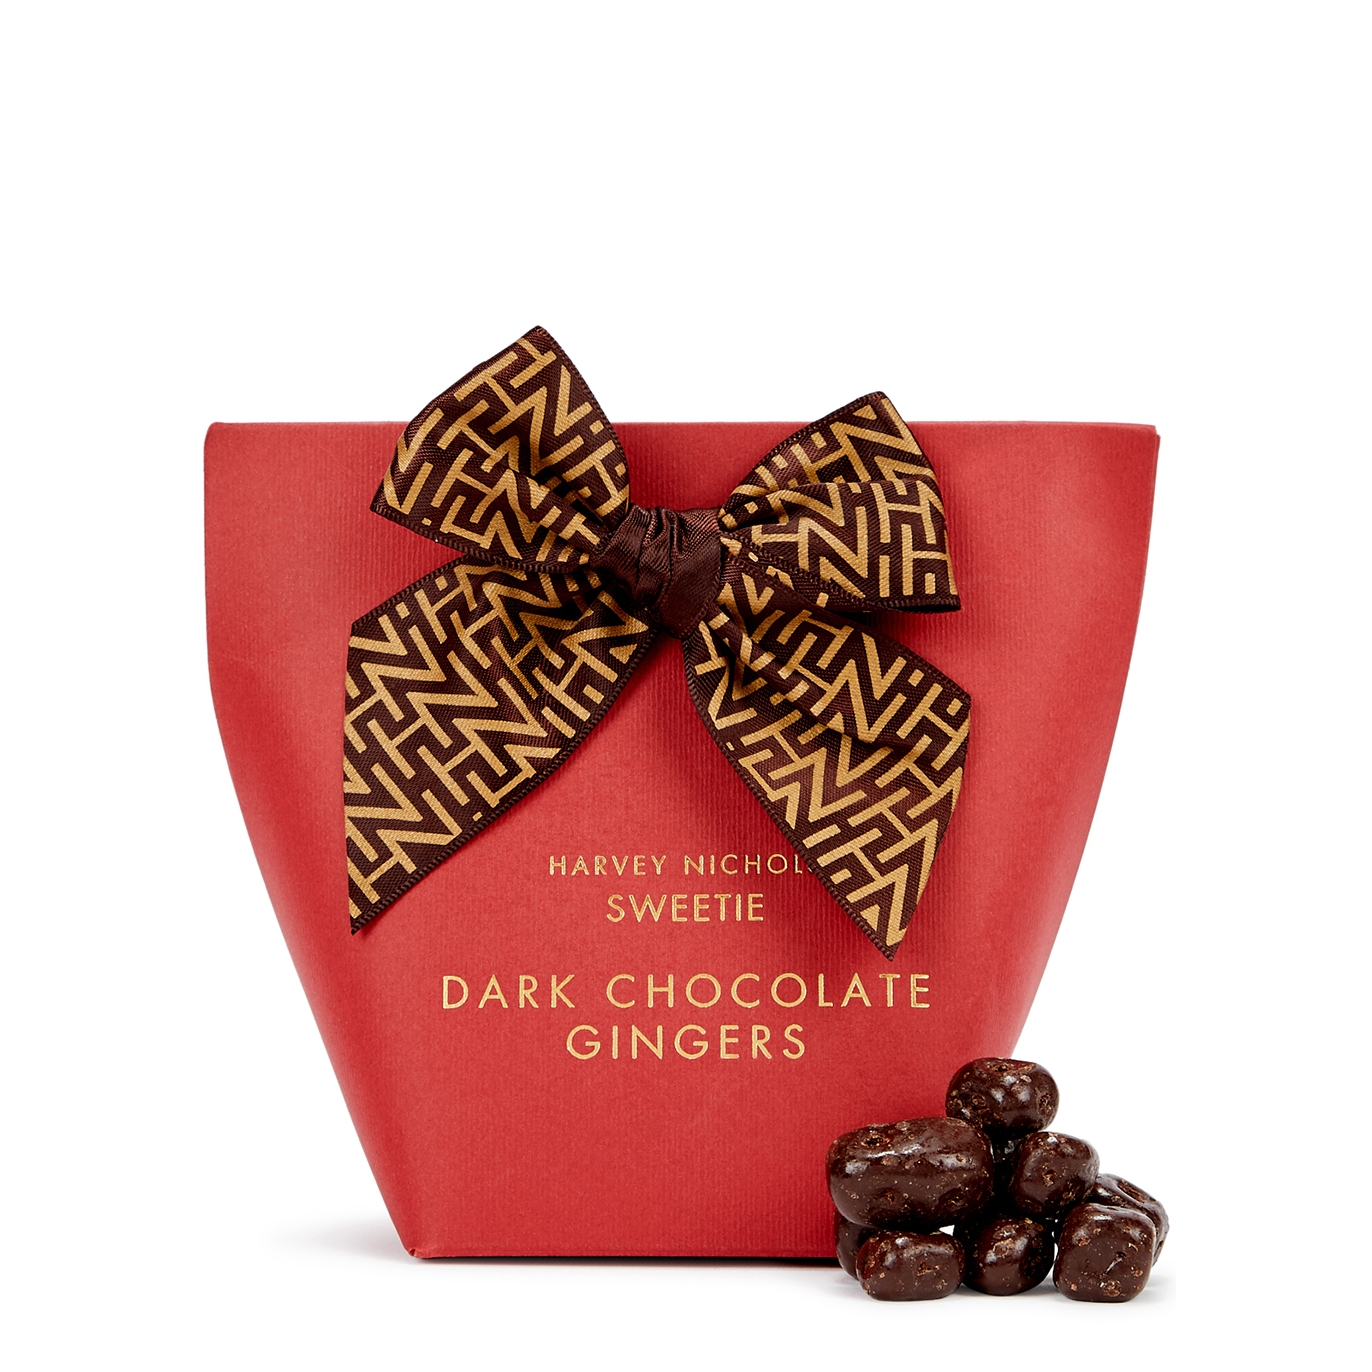 Harvey Nichols Dark Chocolate Gingers, 125g, Sweats & Treats